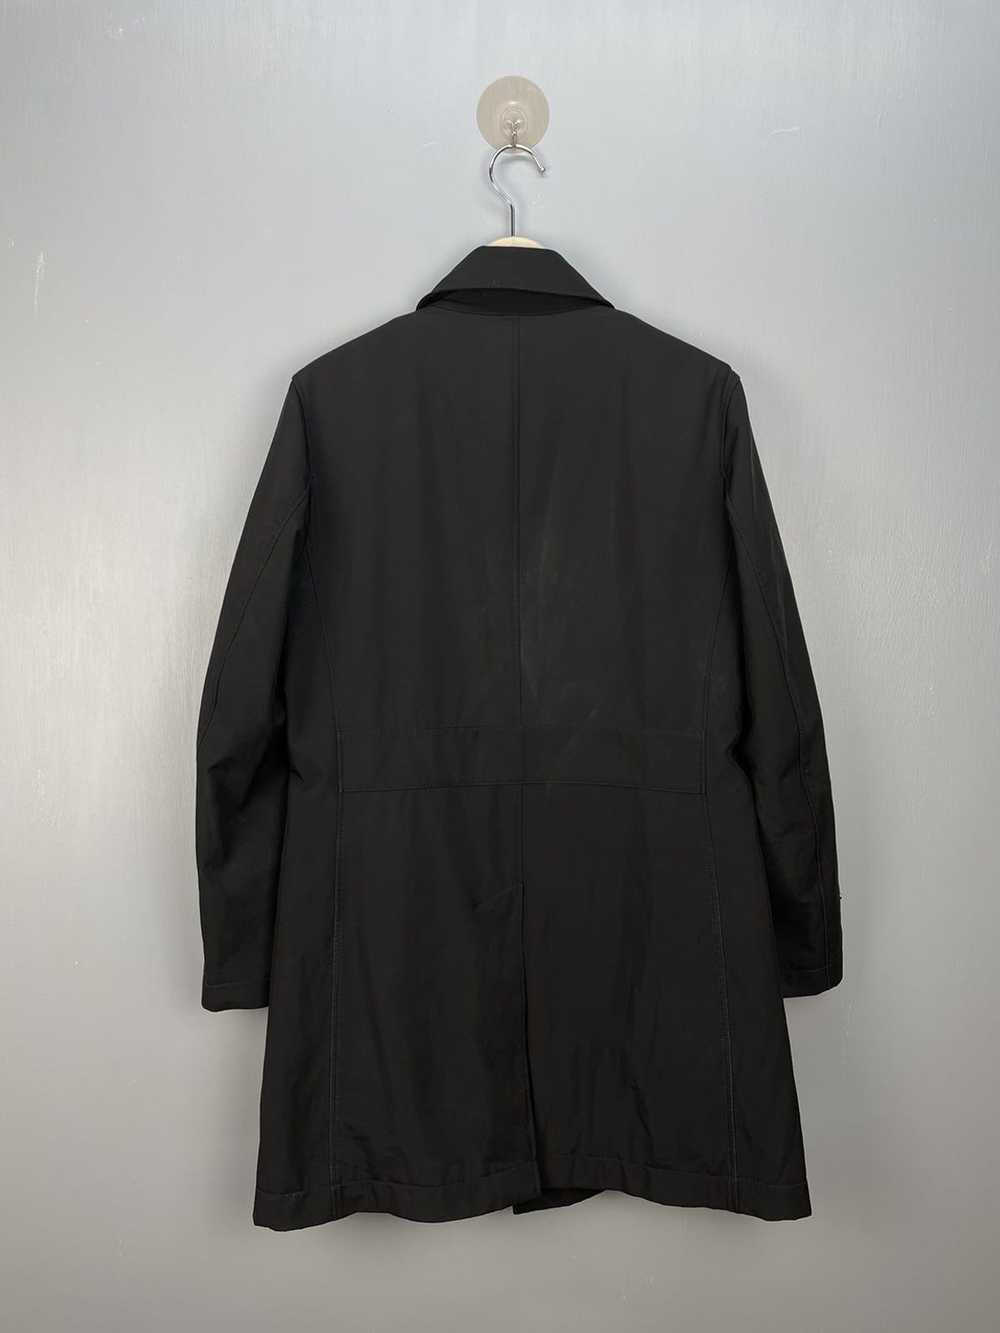 Issey Miyake × Tete Homme Tete Homme jacket - image 2